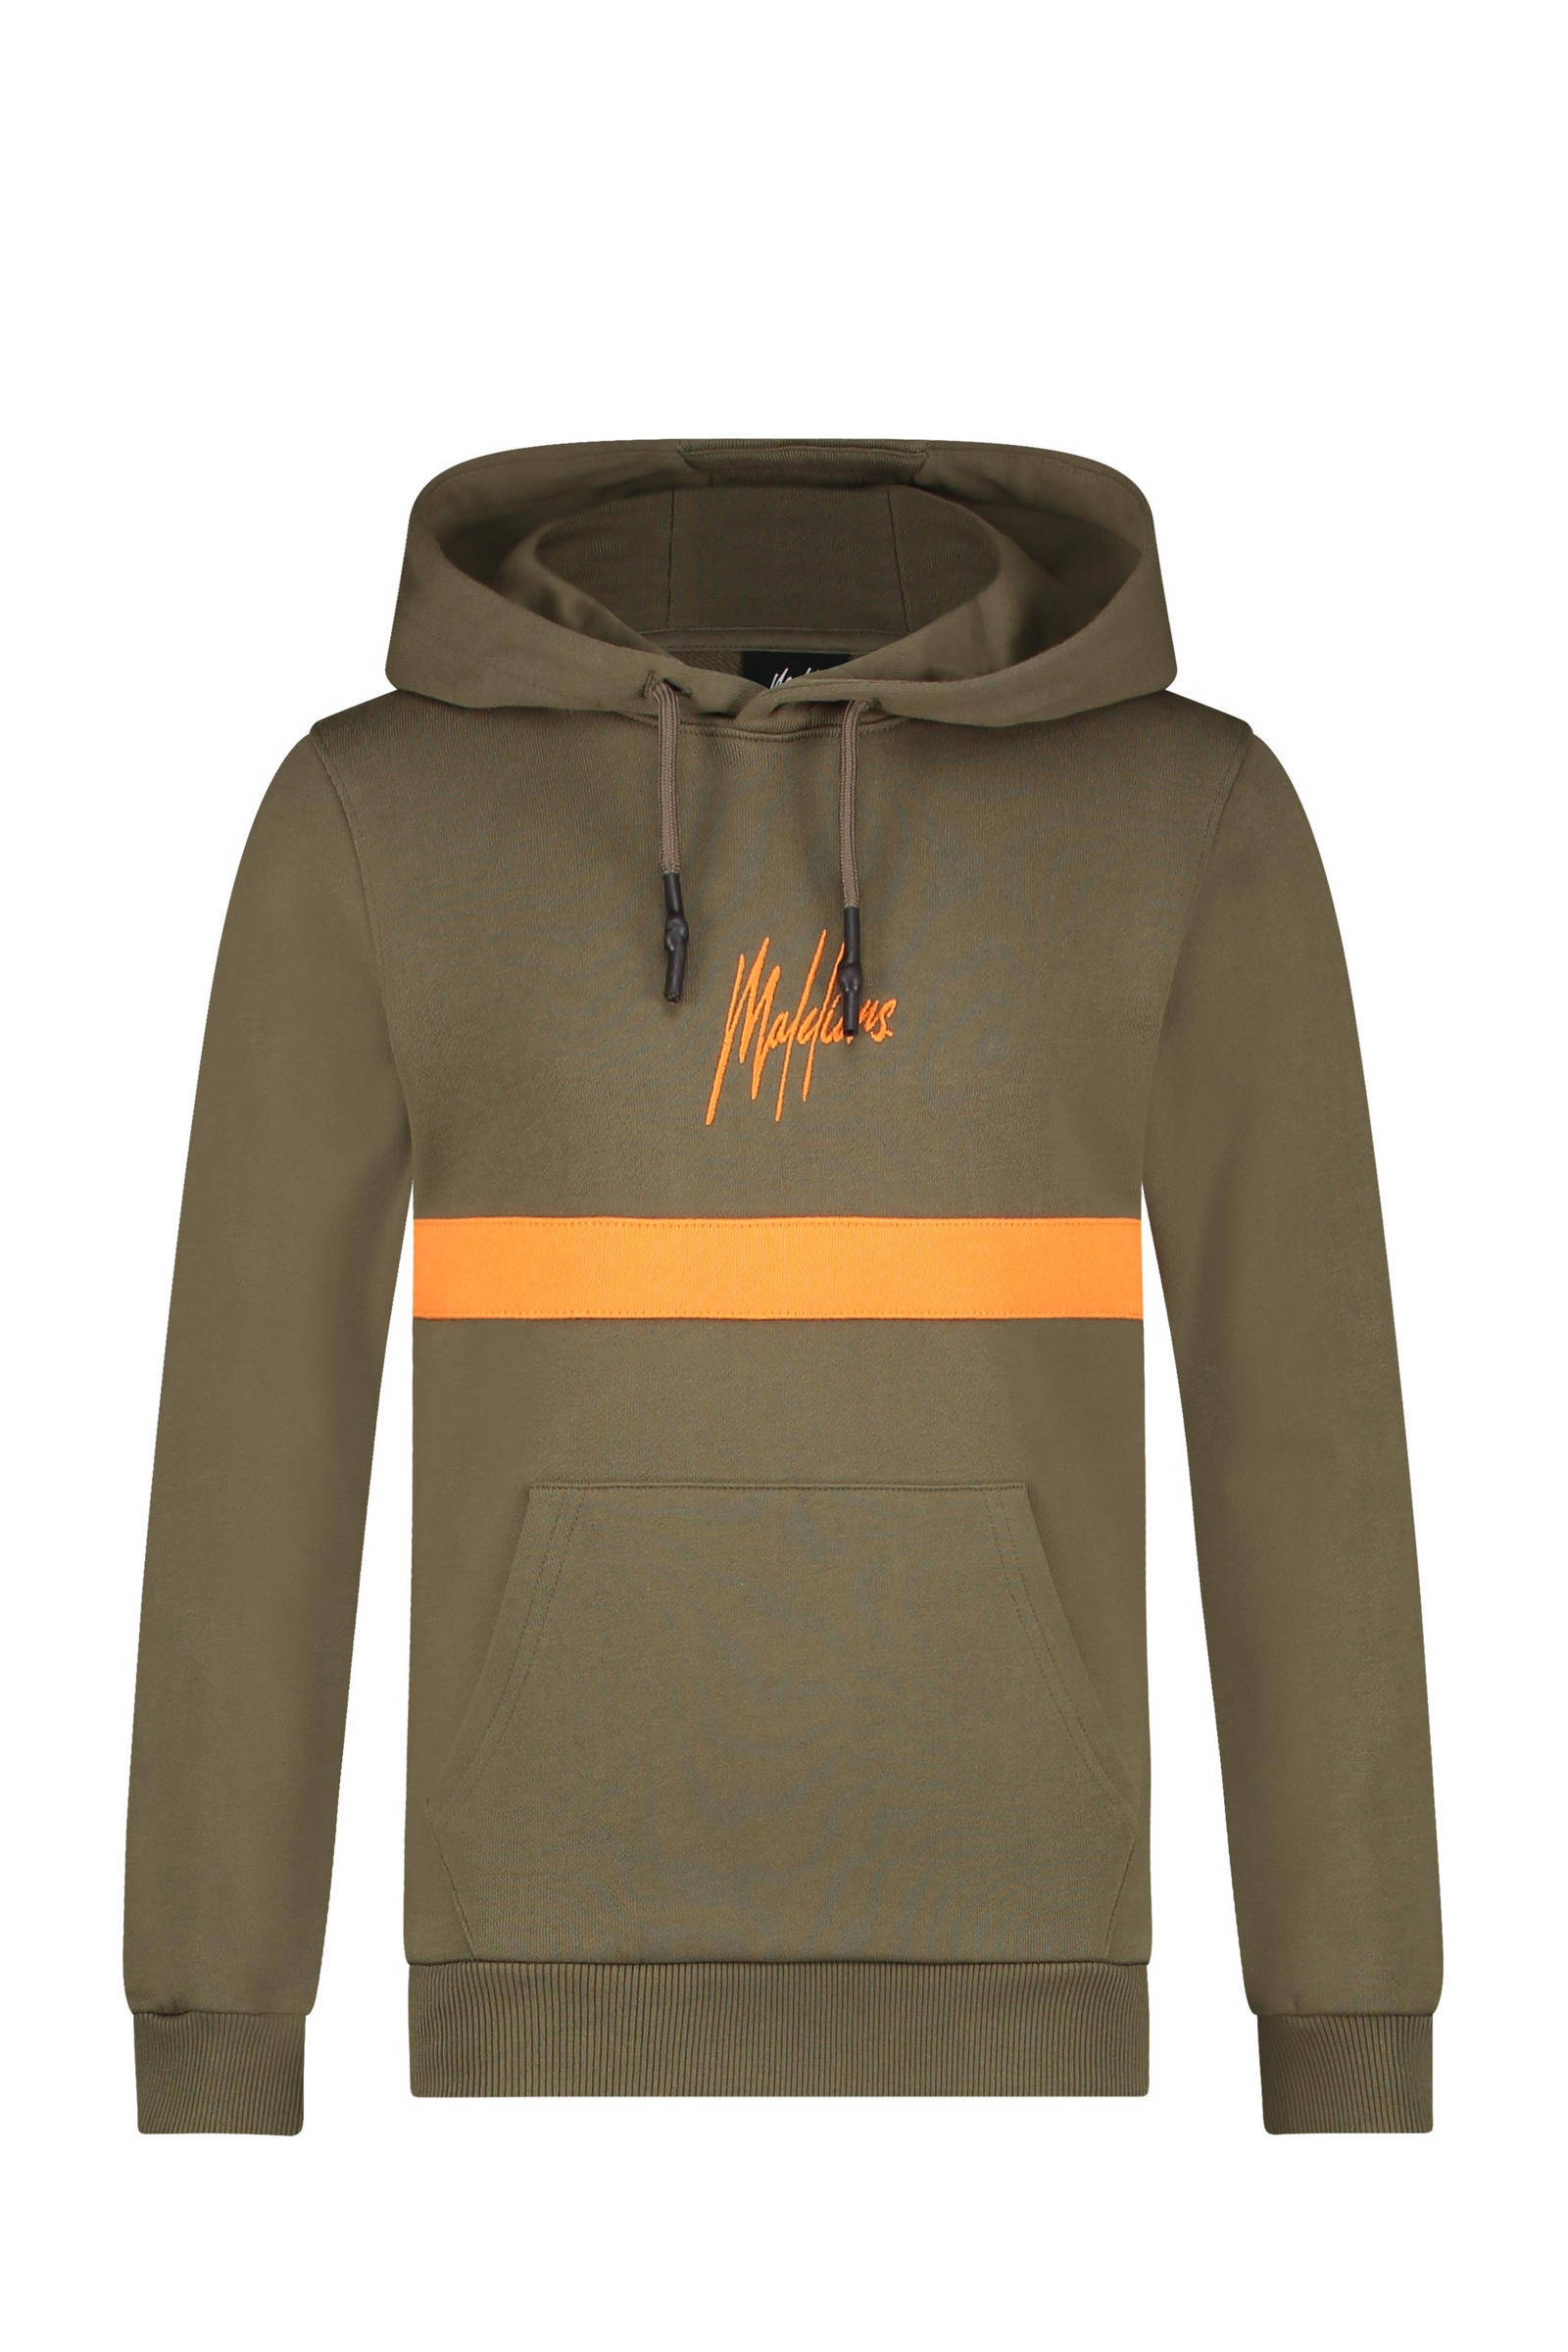 Malelions hoodie met logo donkergroen/oranje online kopen